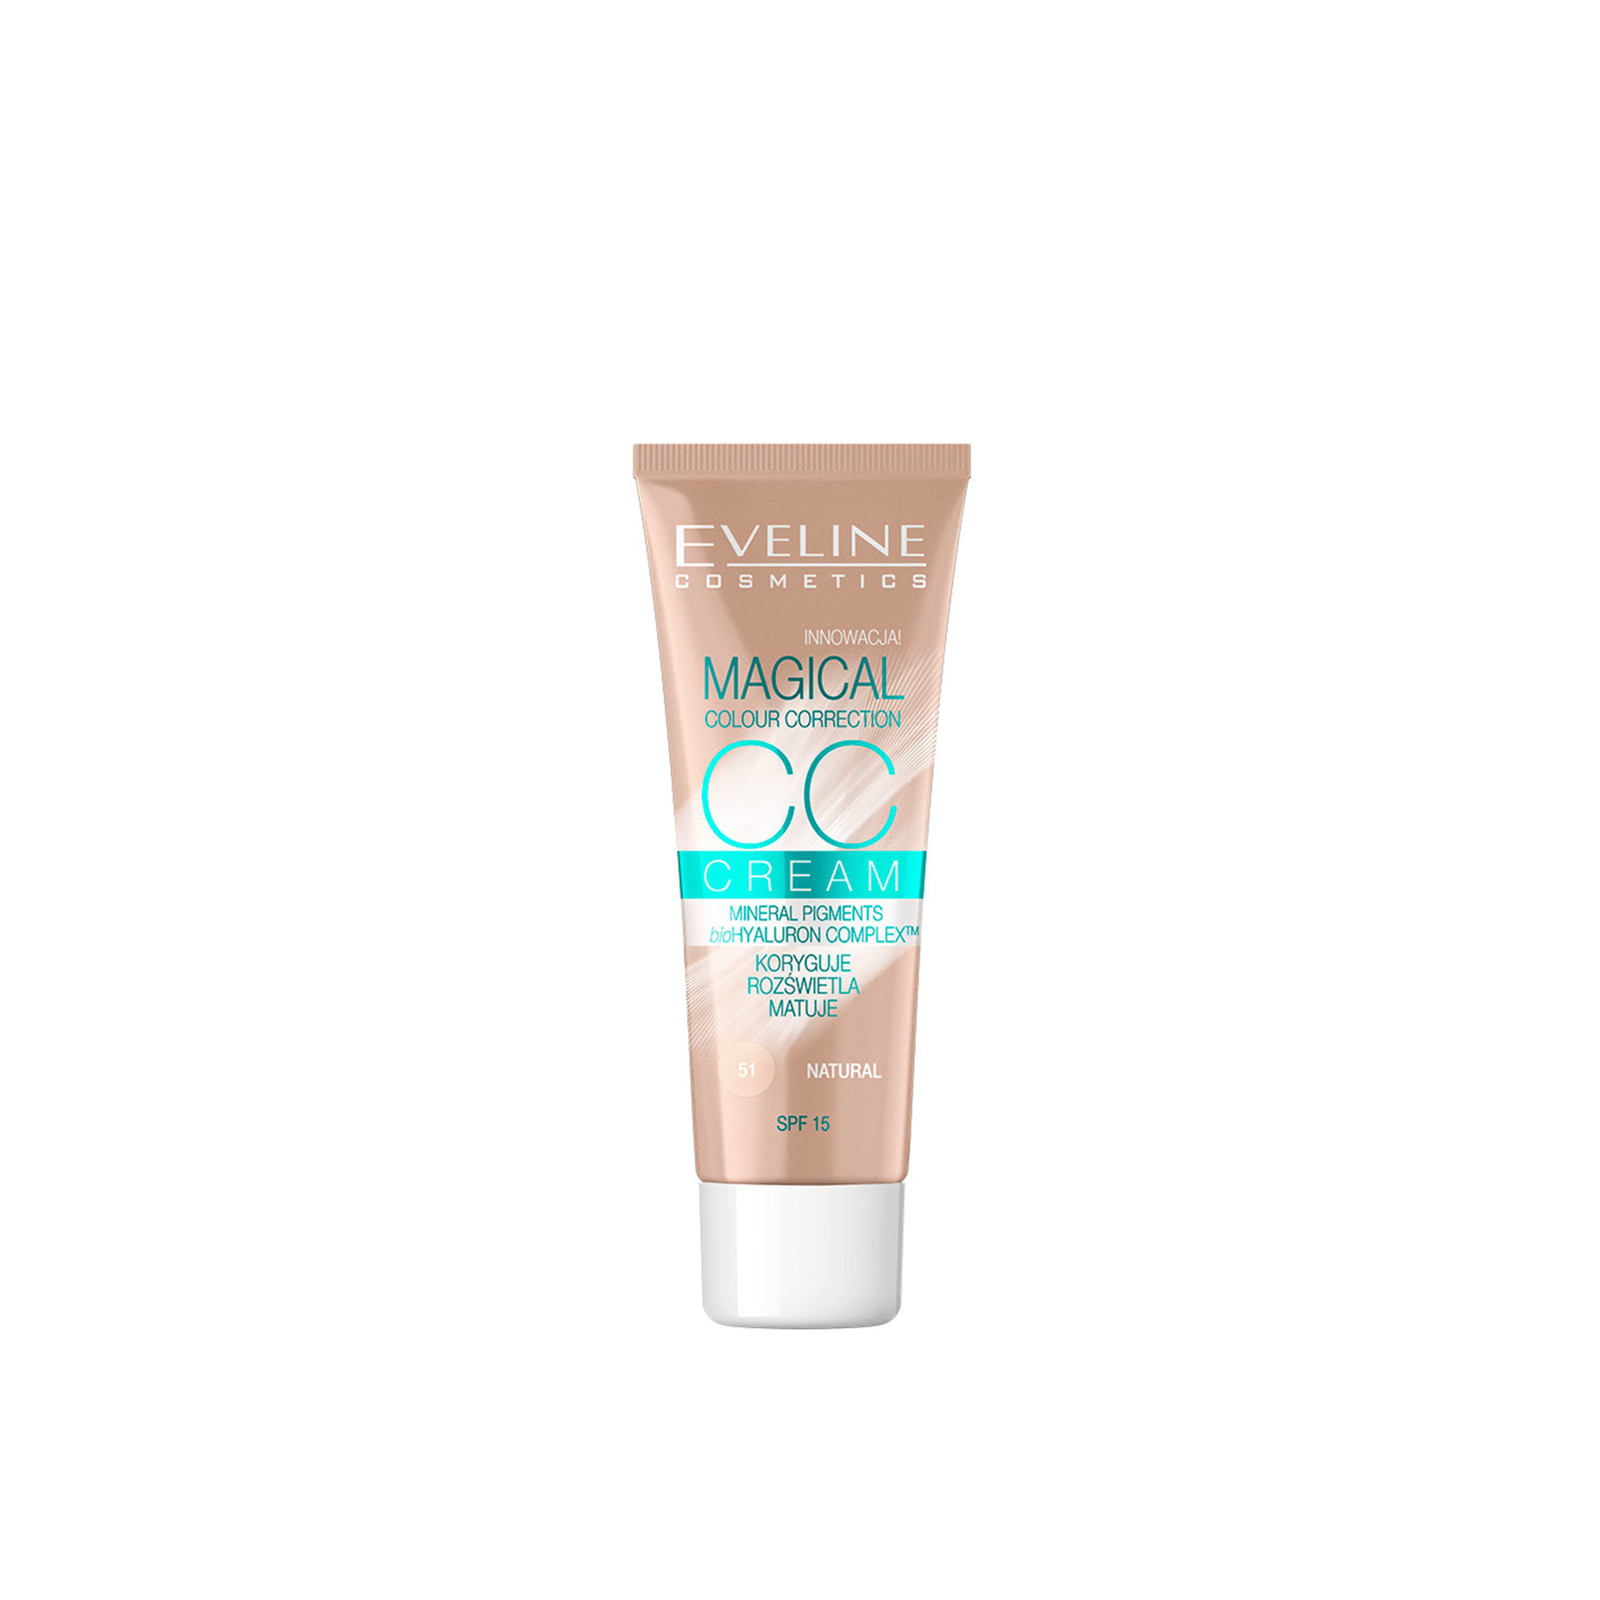 Eveline Cosmetics Magical Colour Correction CC Cream SPF15 51 Natural 30ml (1.06 fl oz)